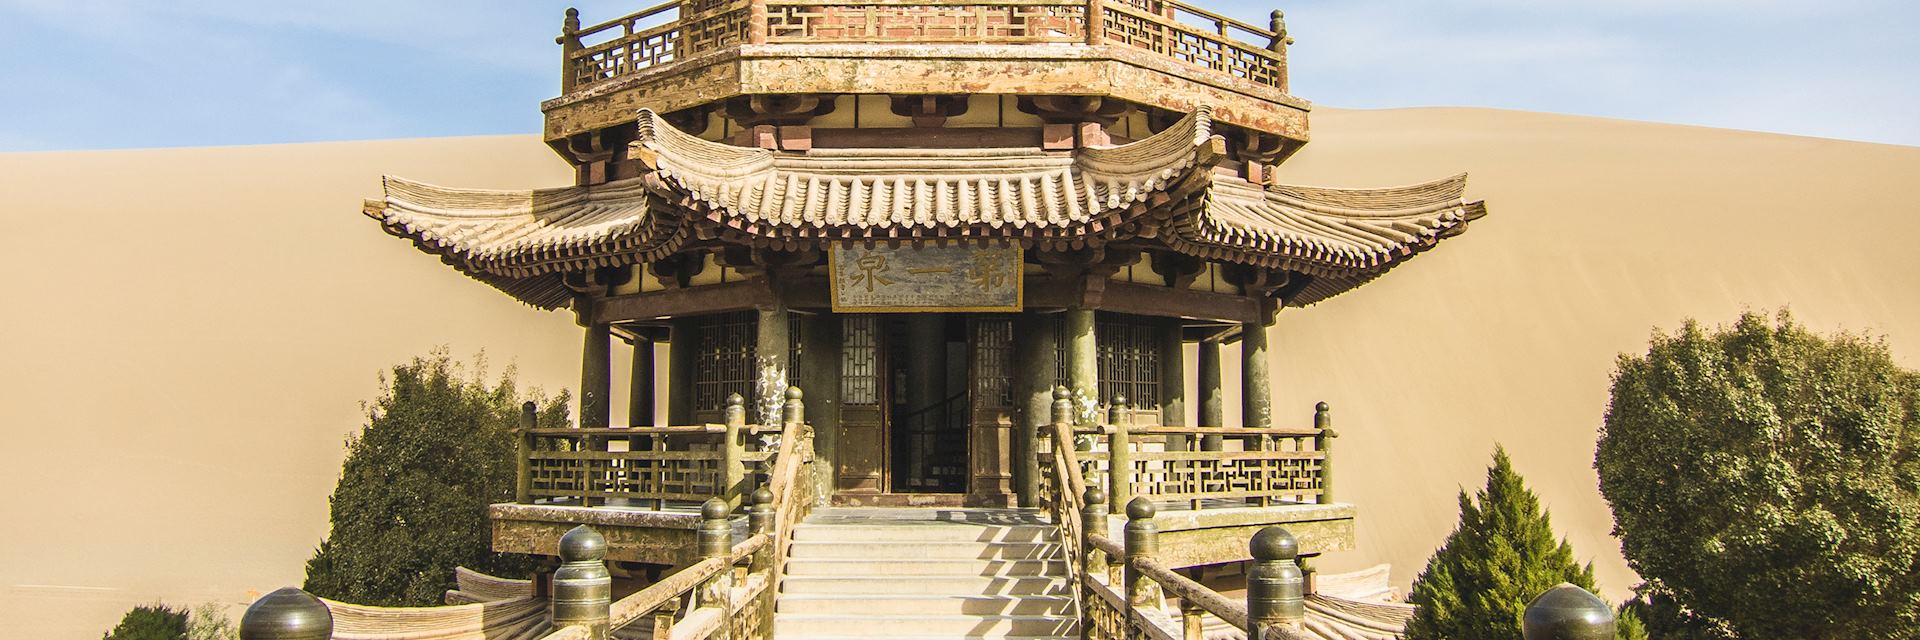 Mingyue Pavilion, Dunhuang